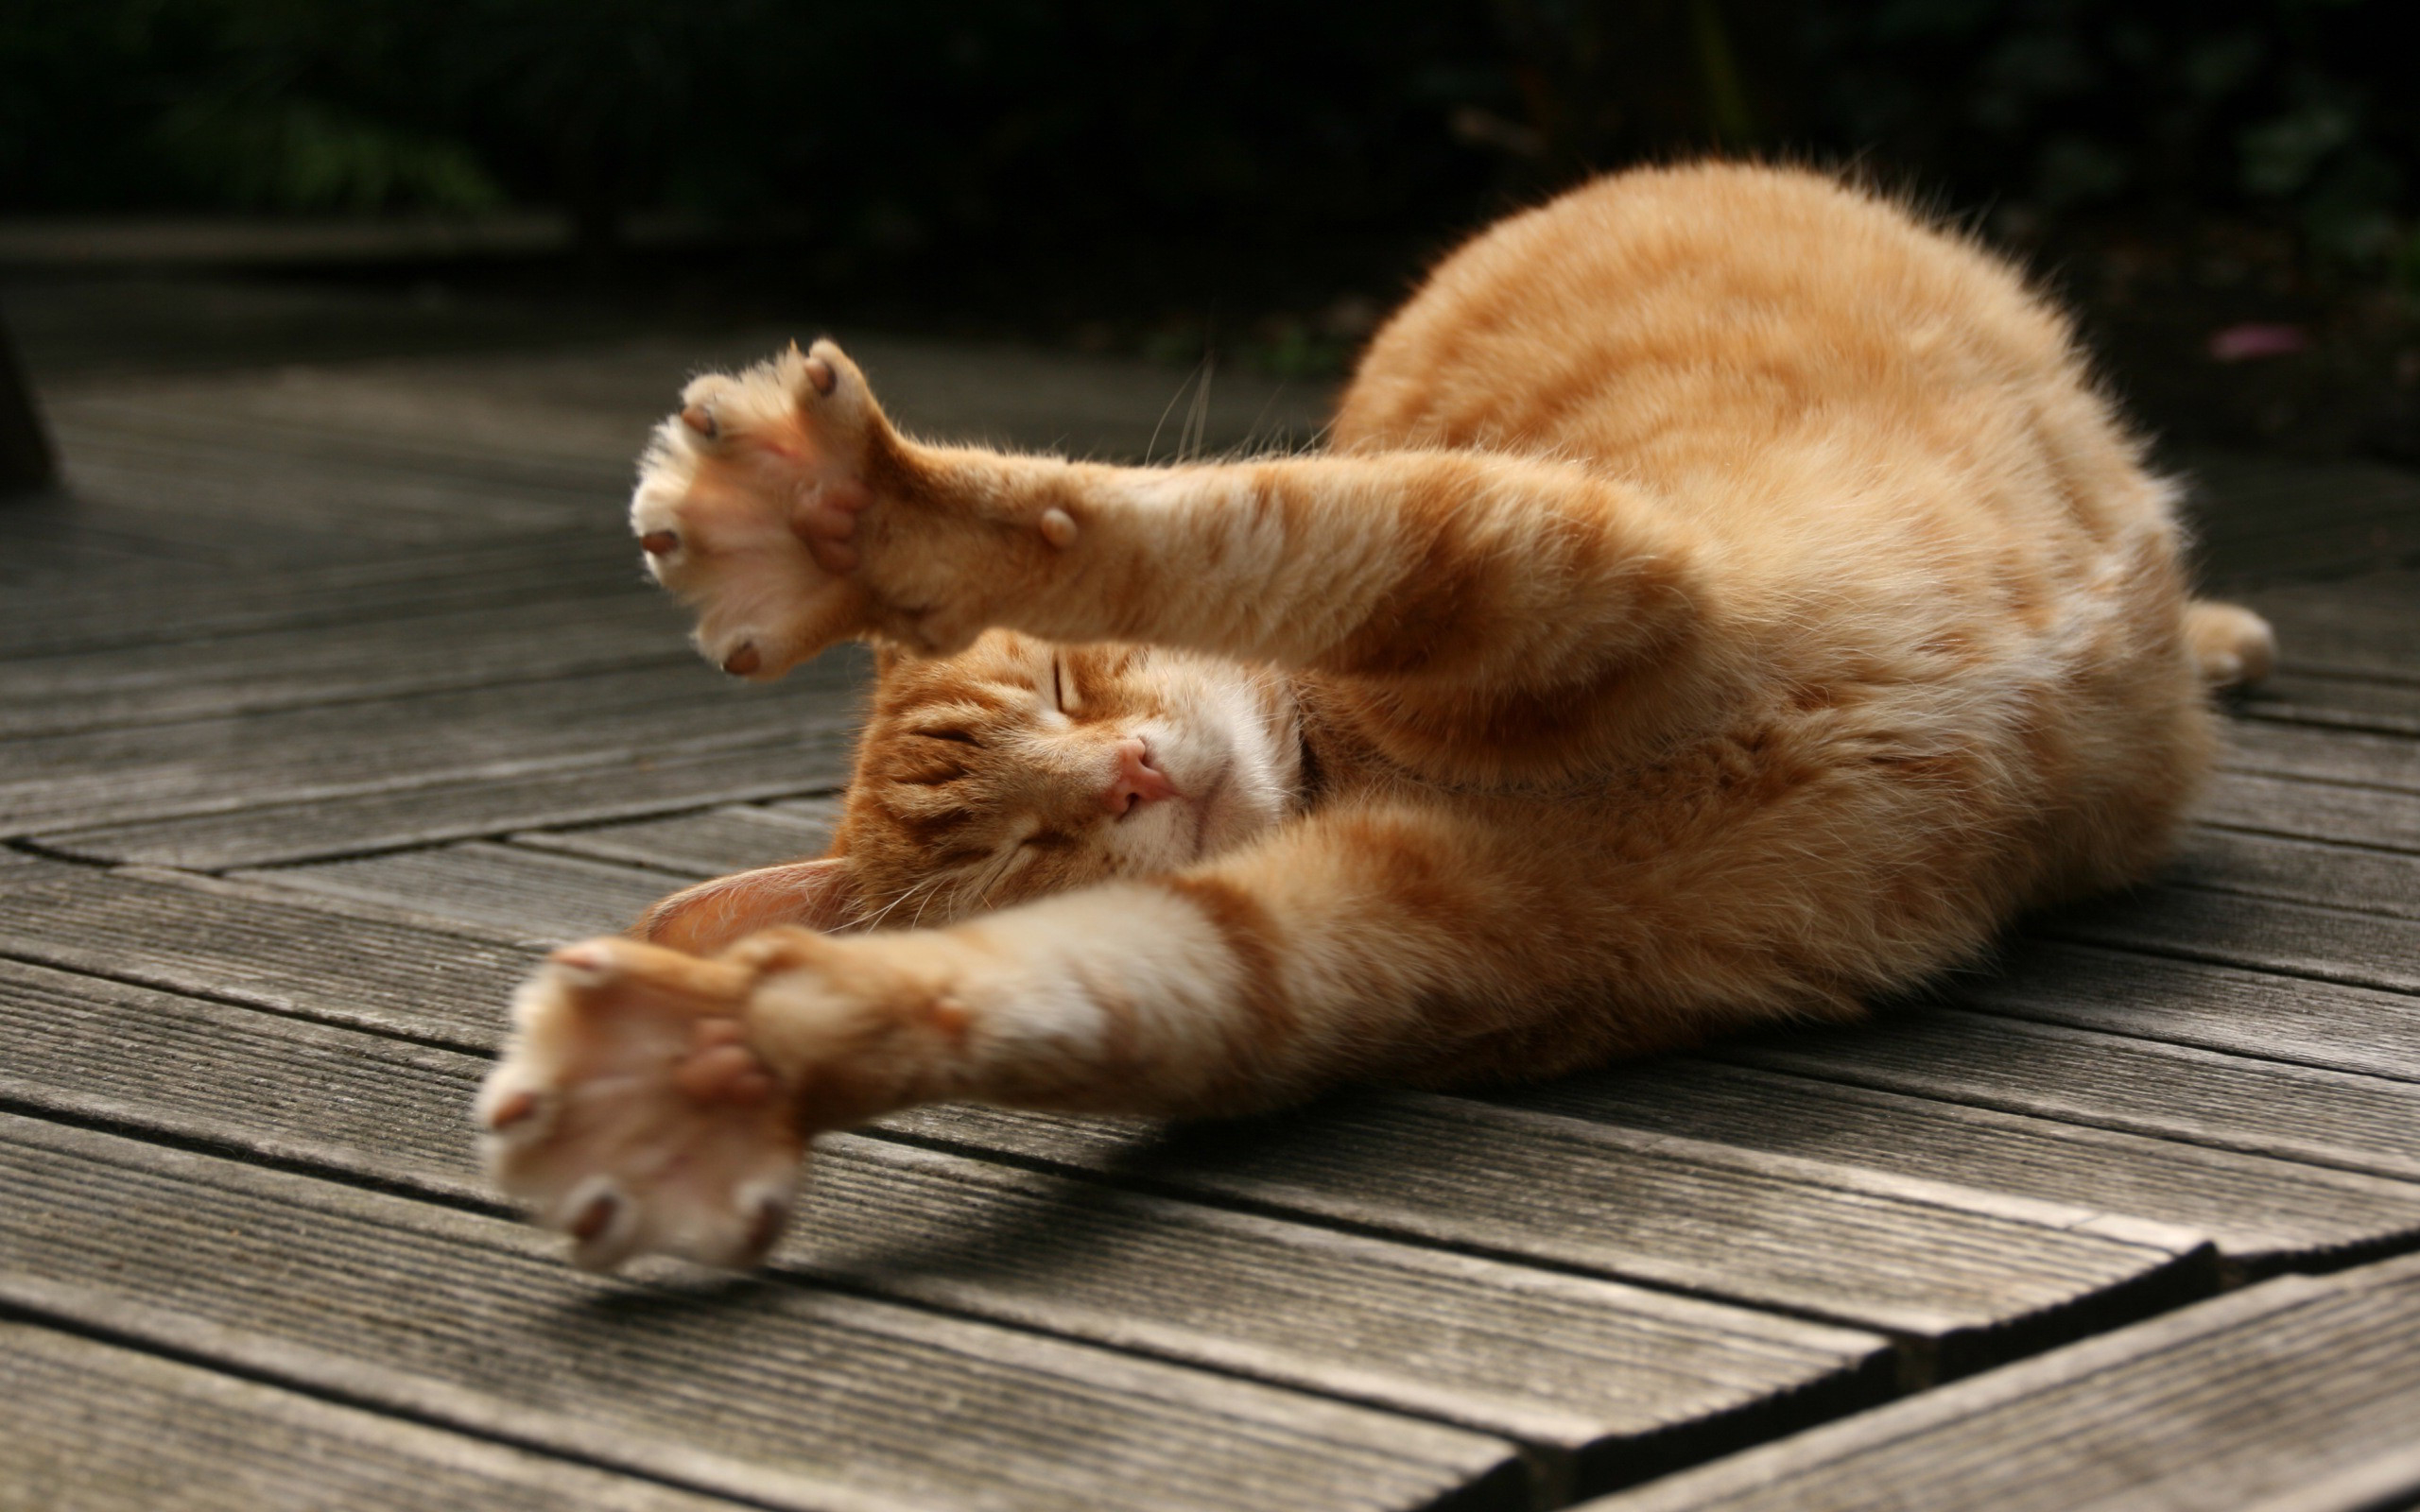 Stretching cat